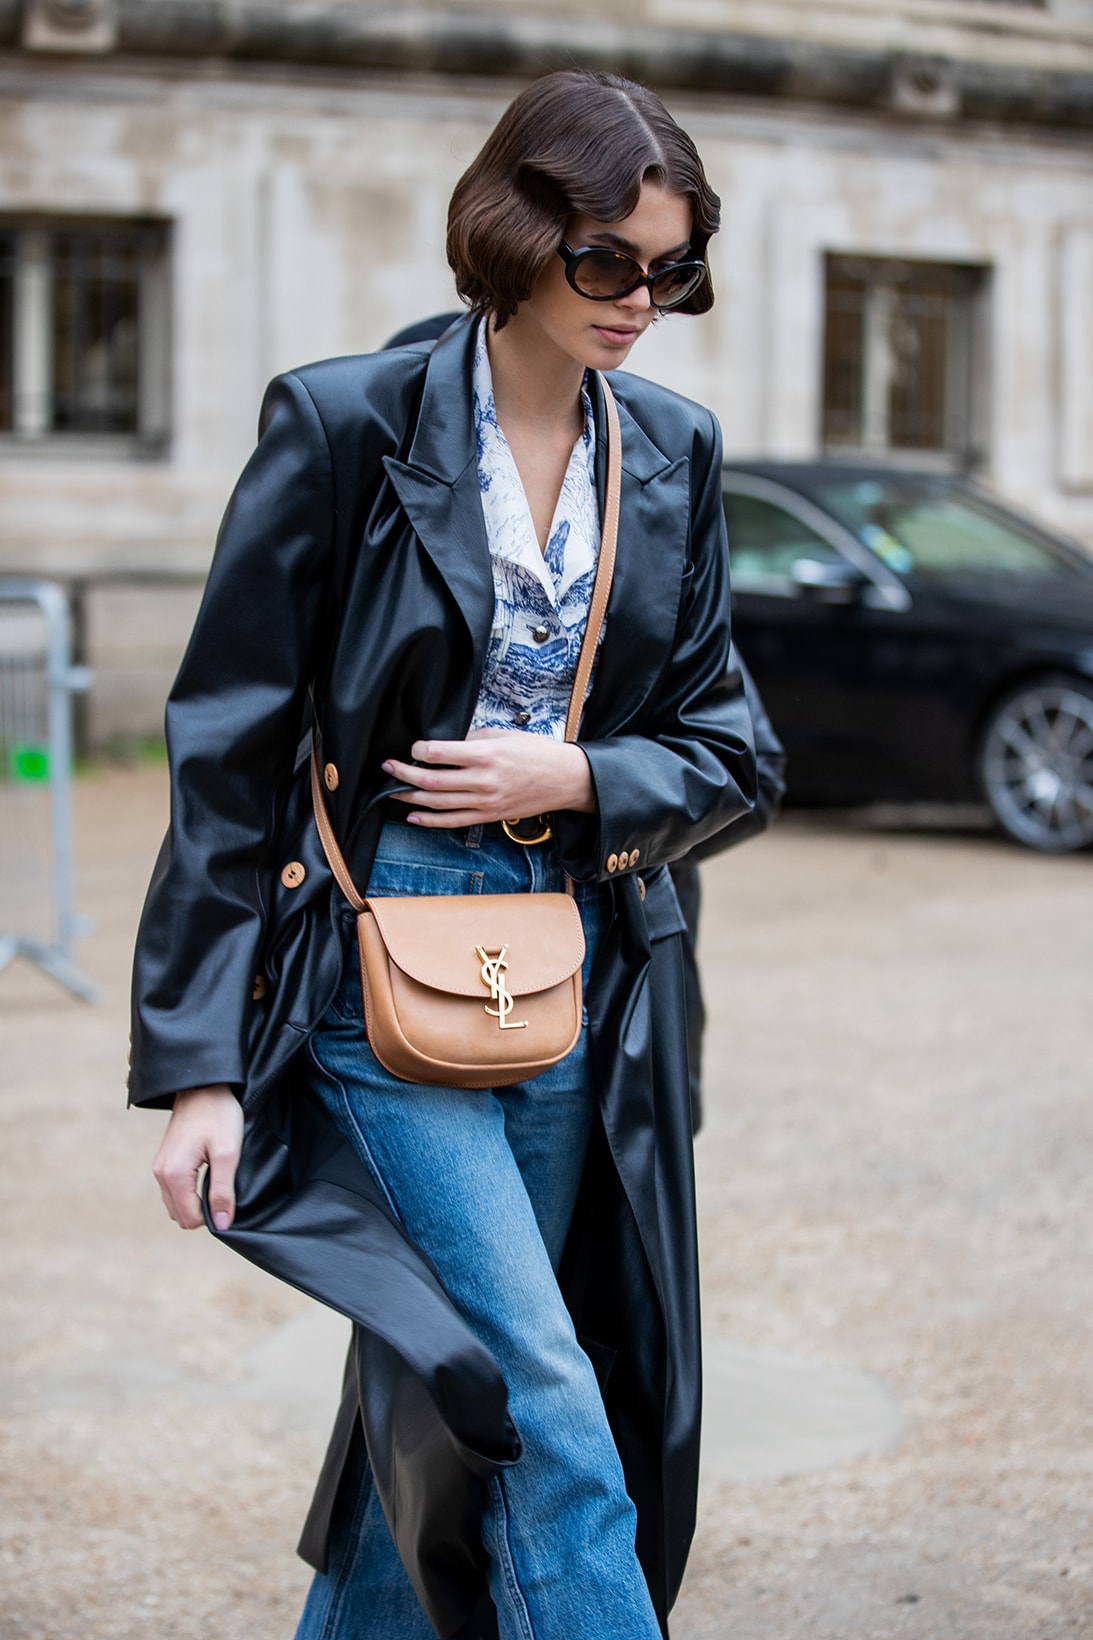 Celeb Style: Leather Dresses